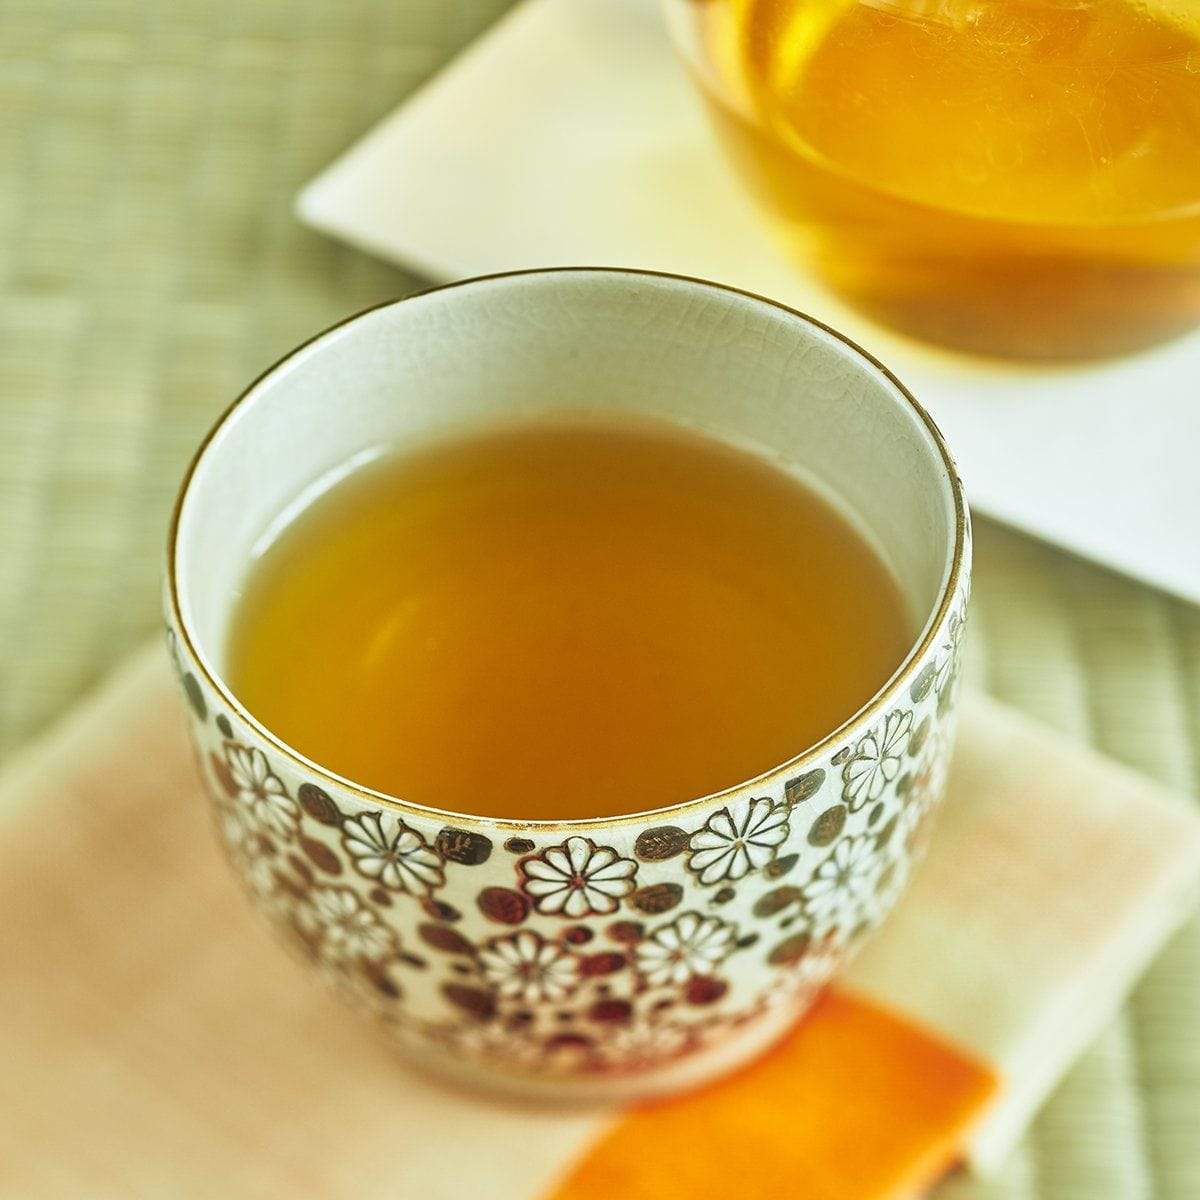 Ocha & Co. Organic Japanese Hojicha Green Tea